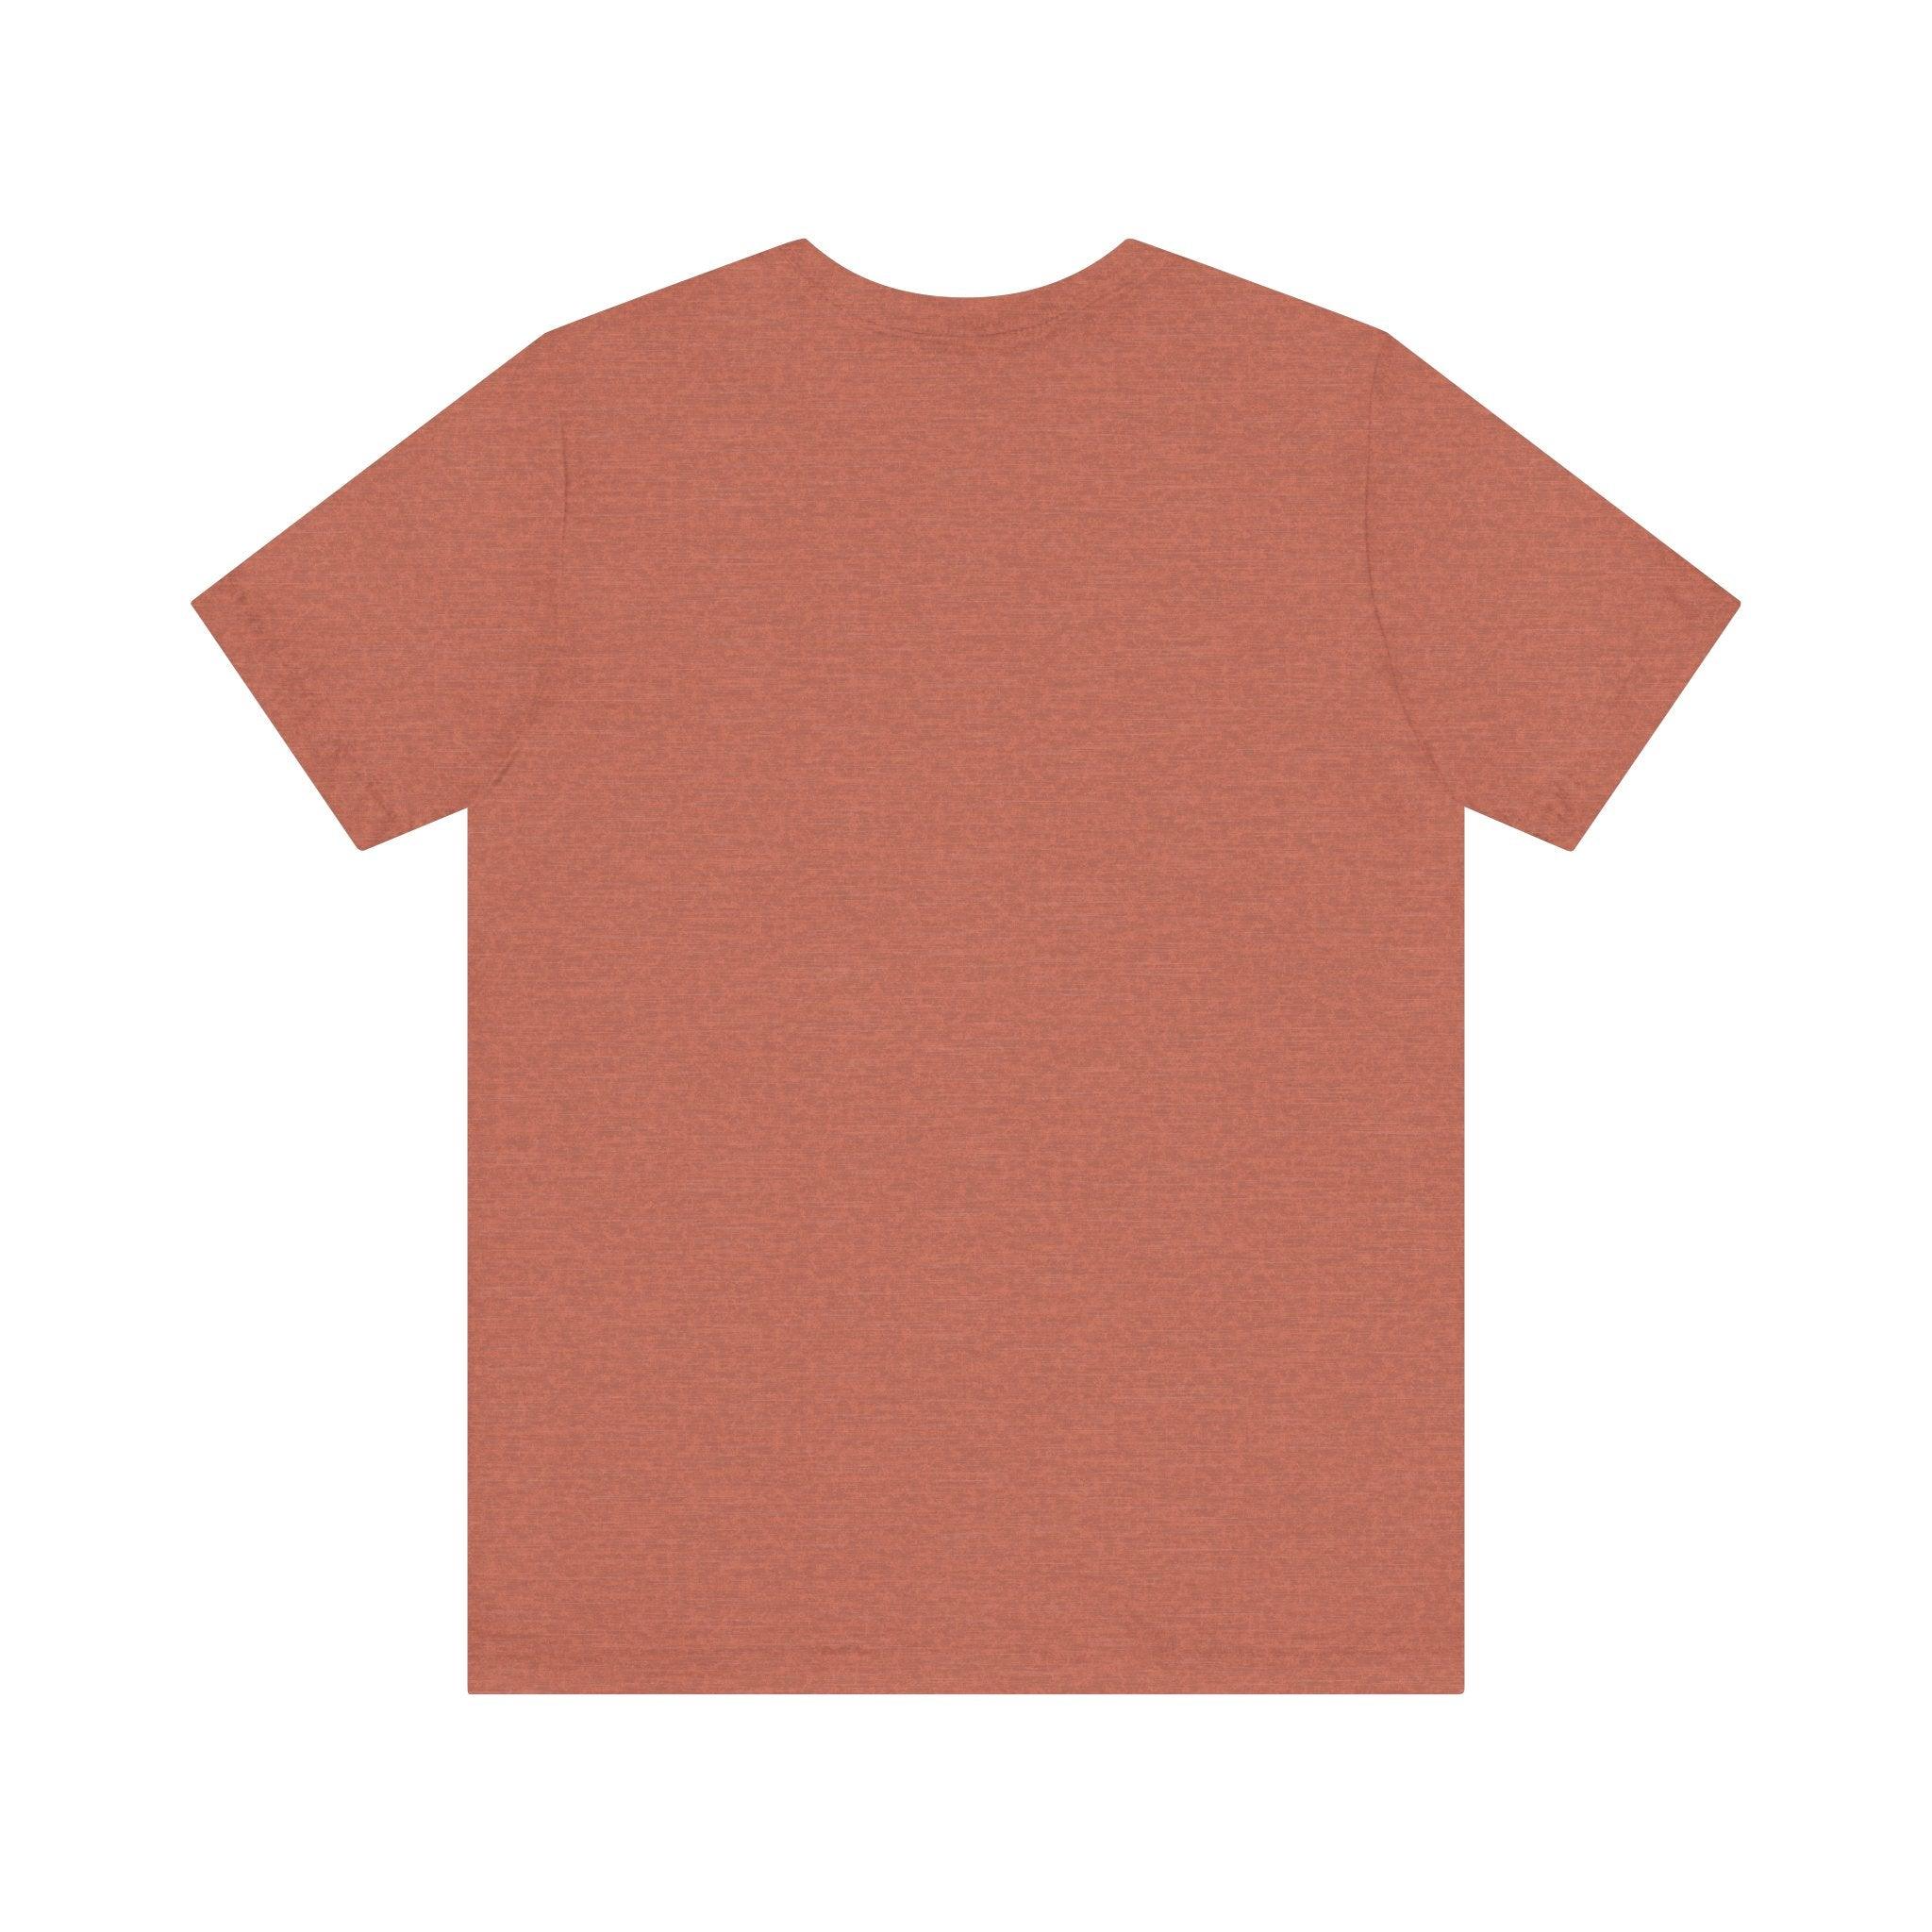 Hello Summer Doodle T-Shirt - Unisex Jersey Short Sleeve Tee - Soulshinecreators